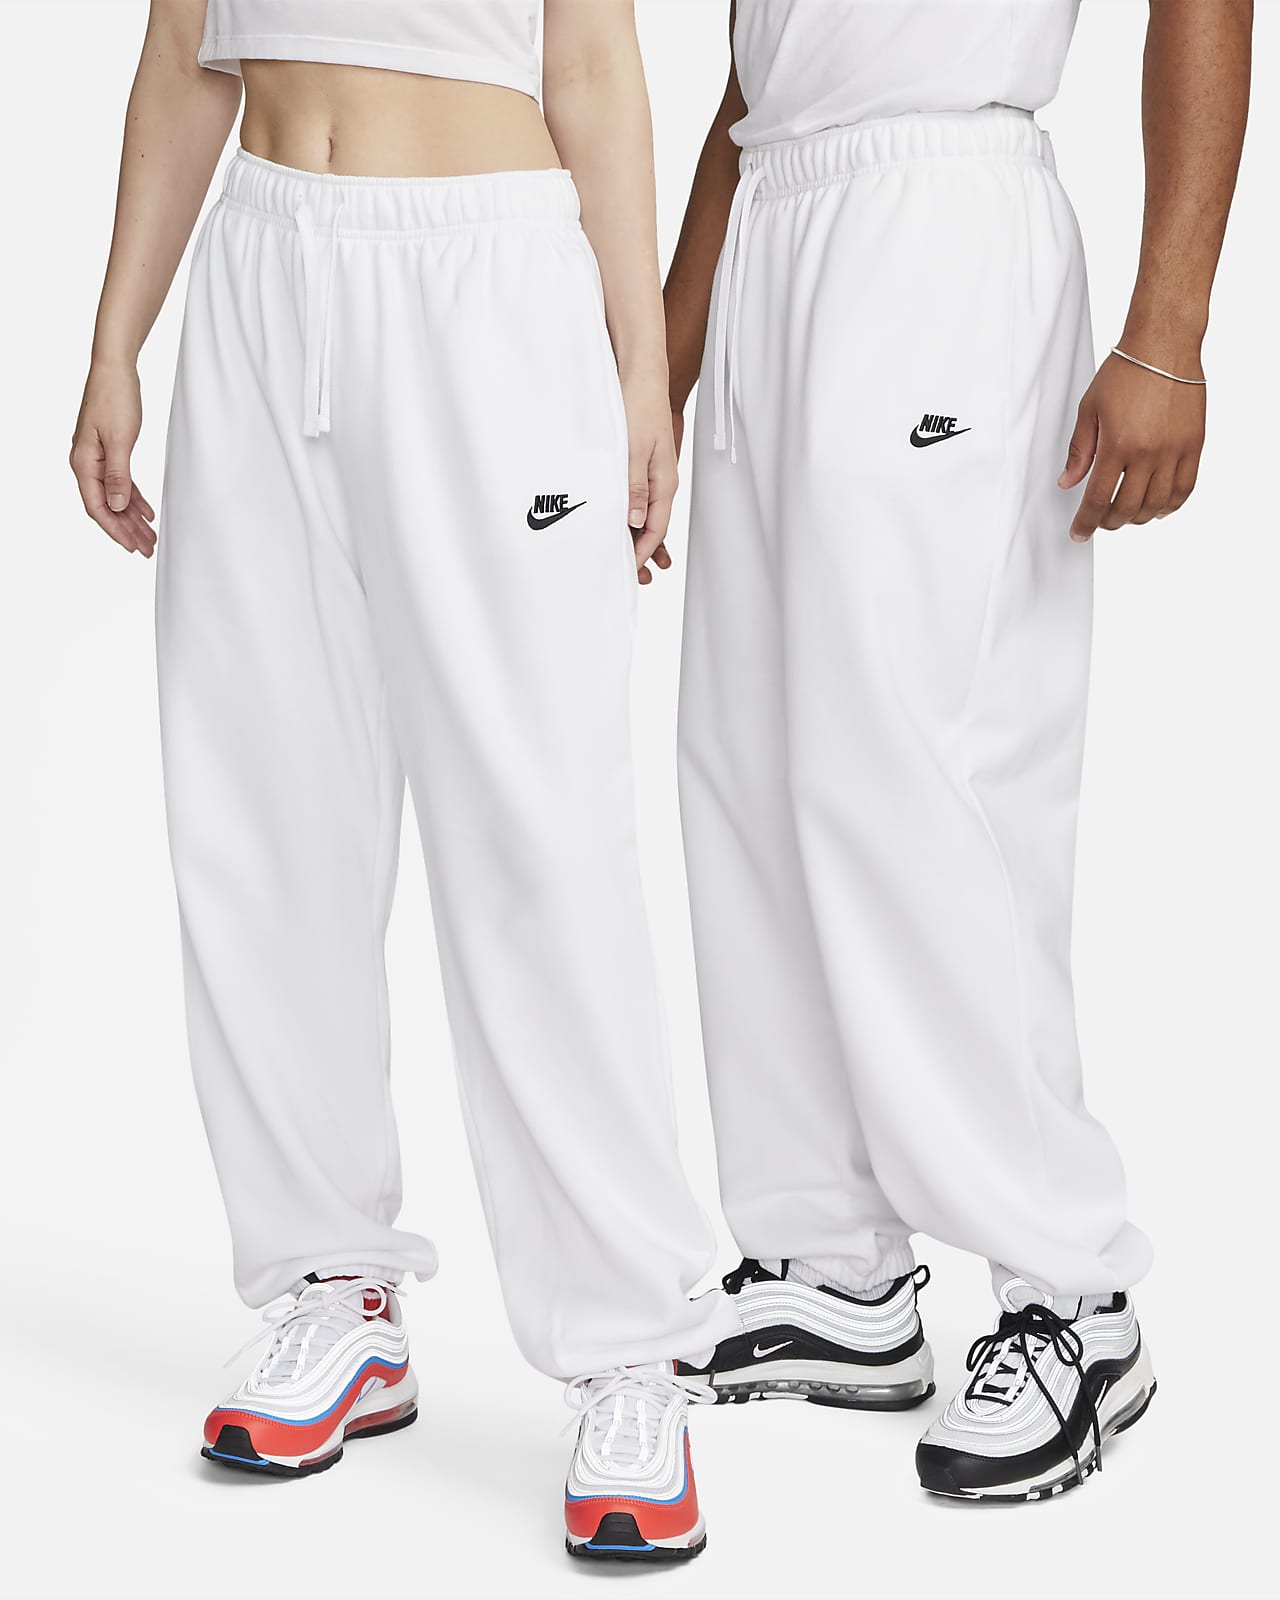 Are Nike Sweatpants Worth It? – solowomen